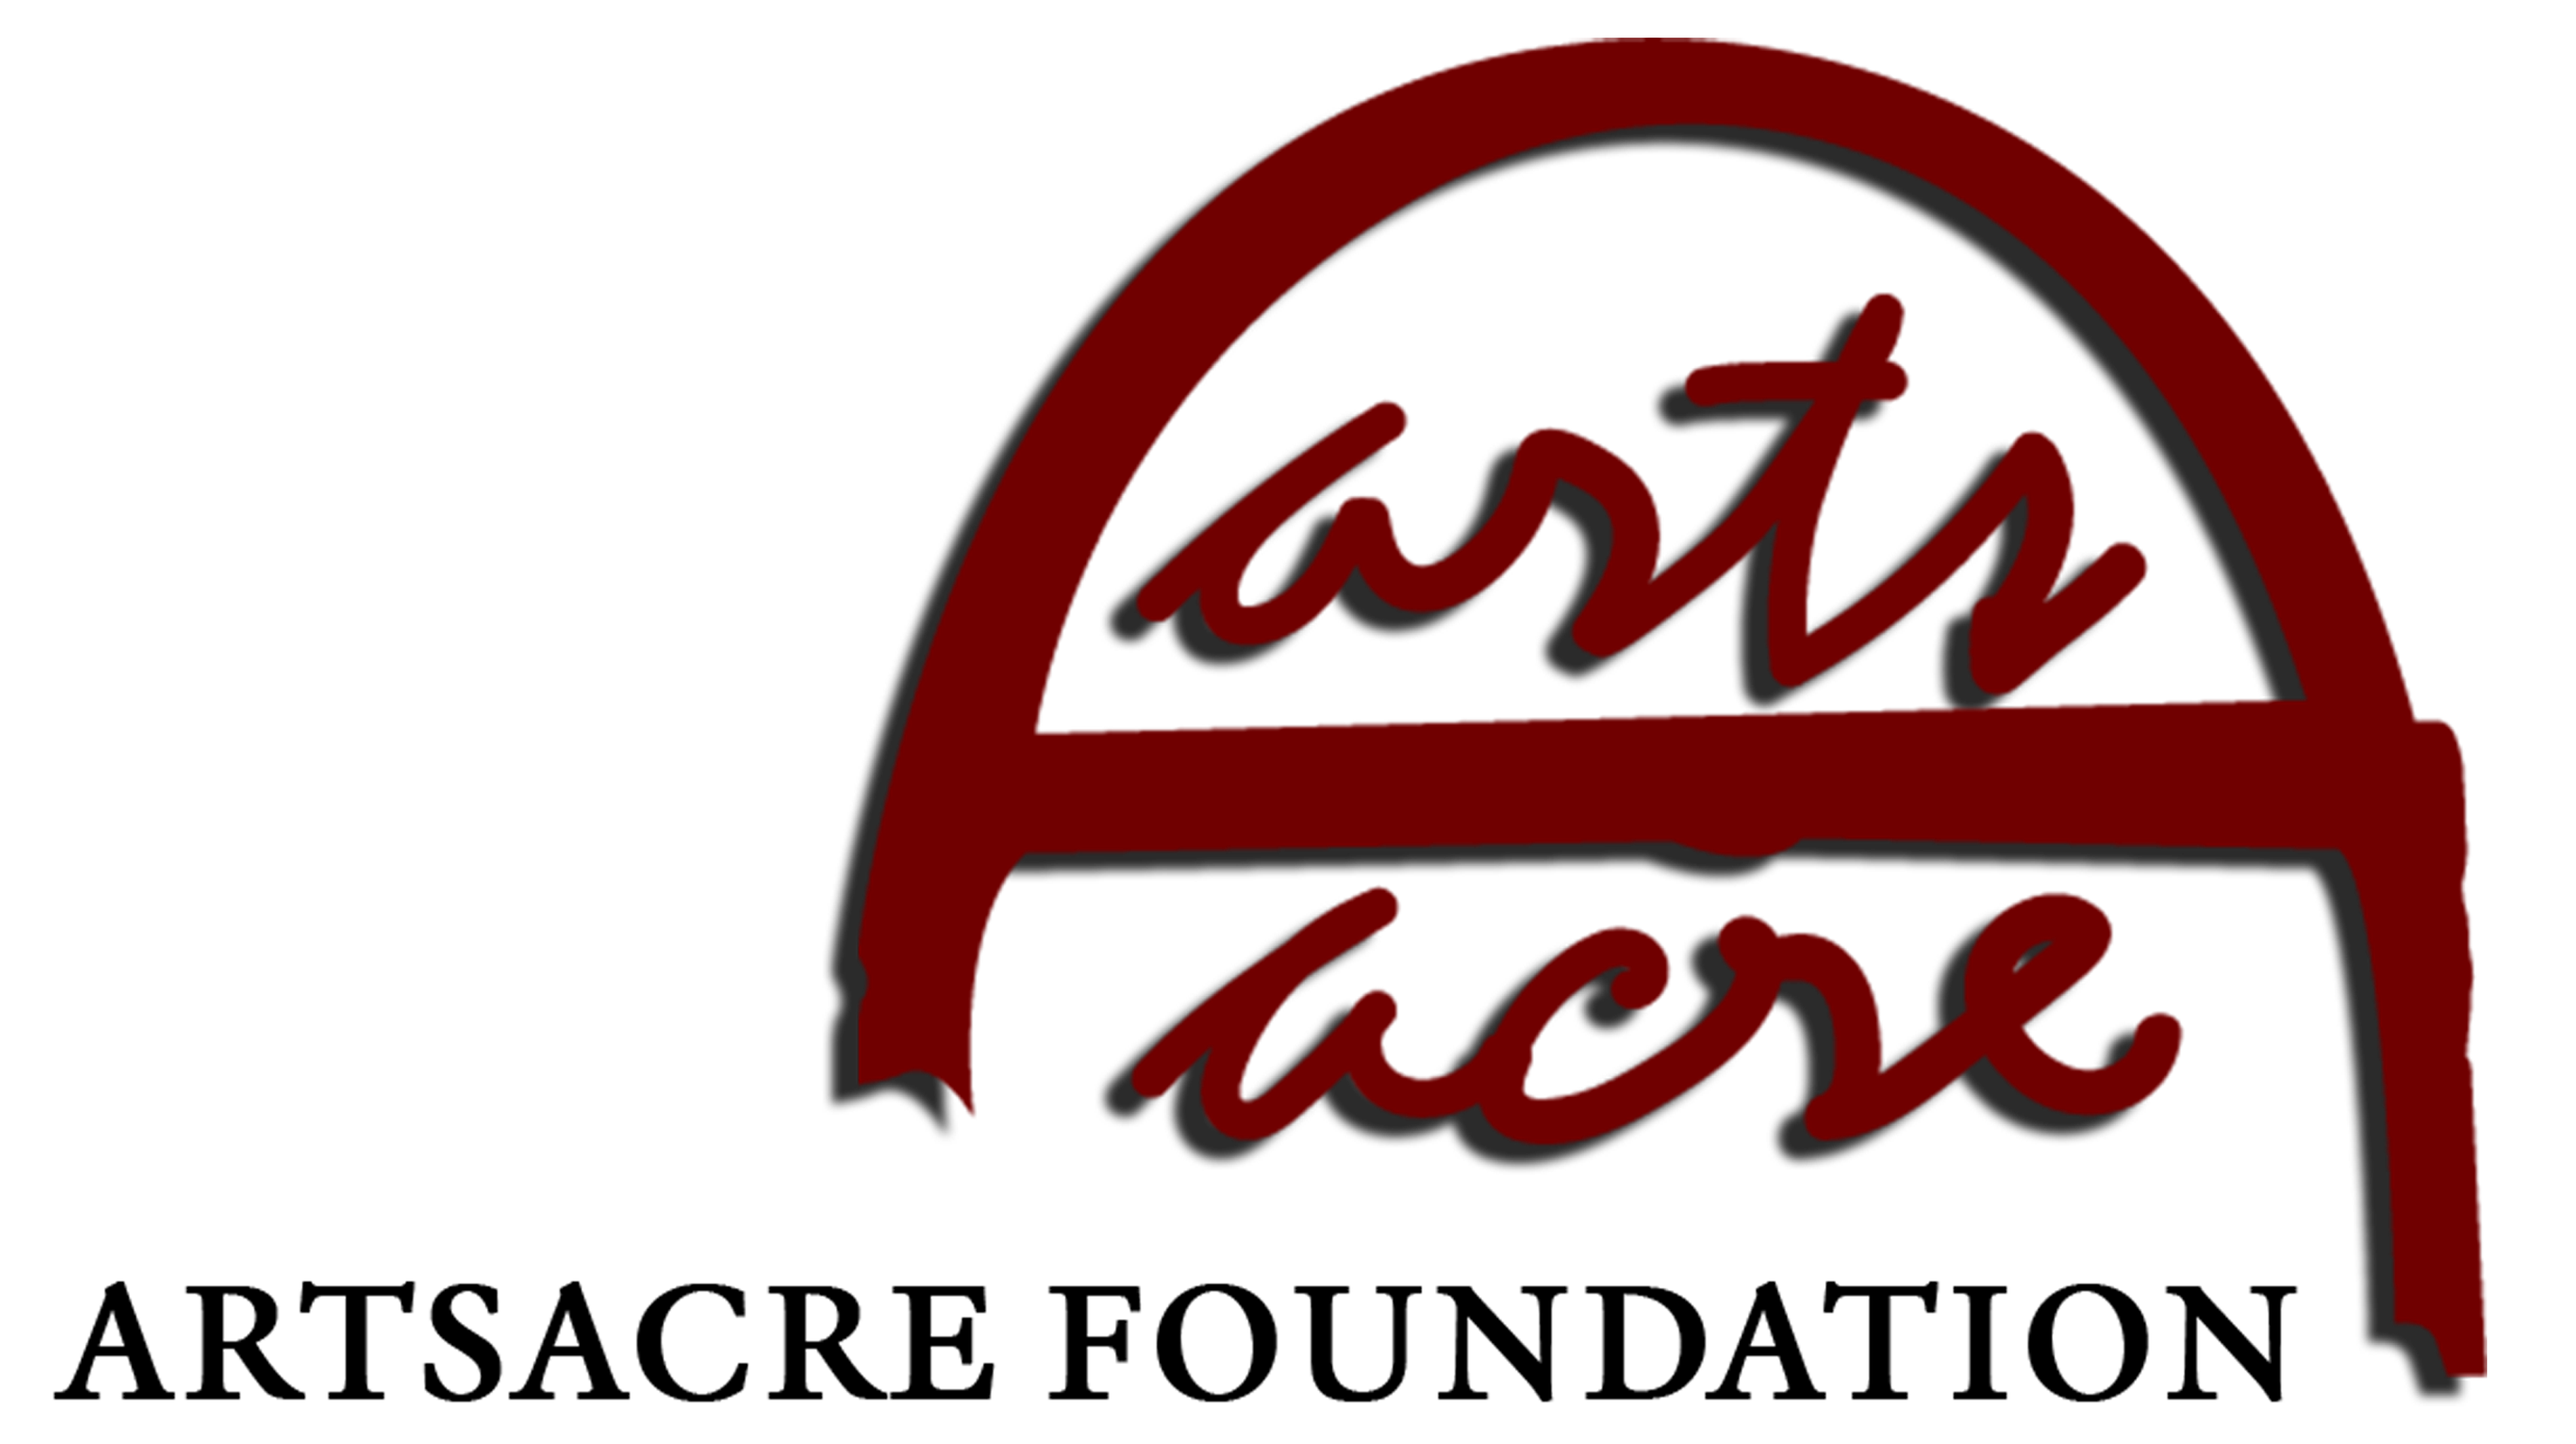 Artsacre Foundation